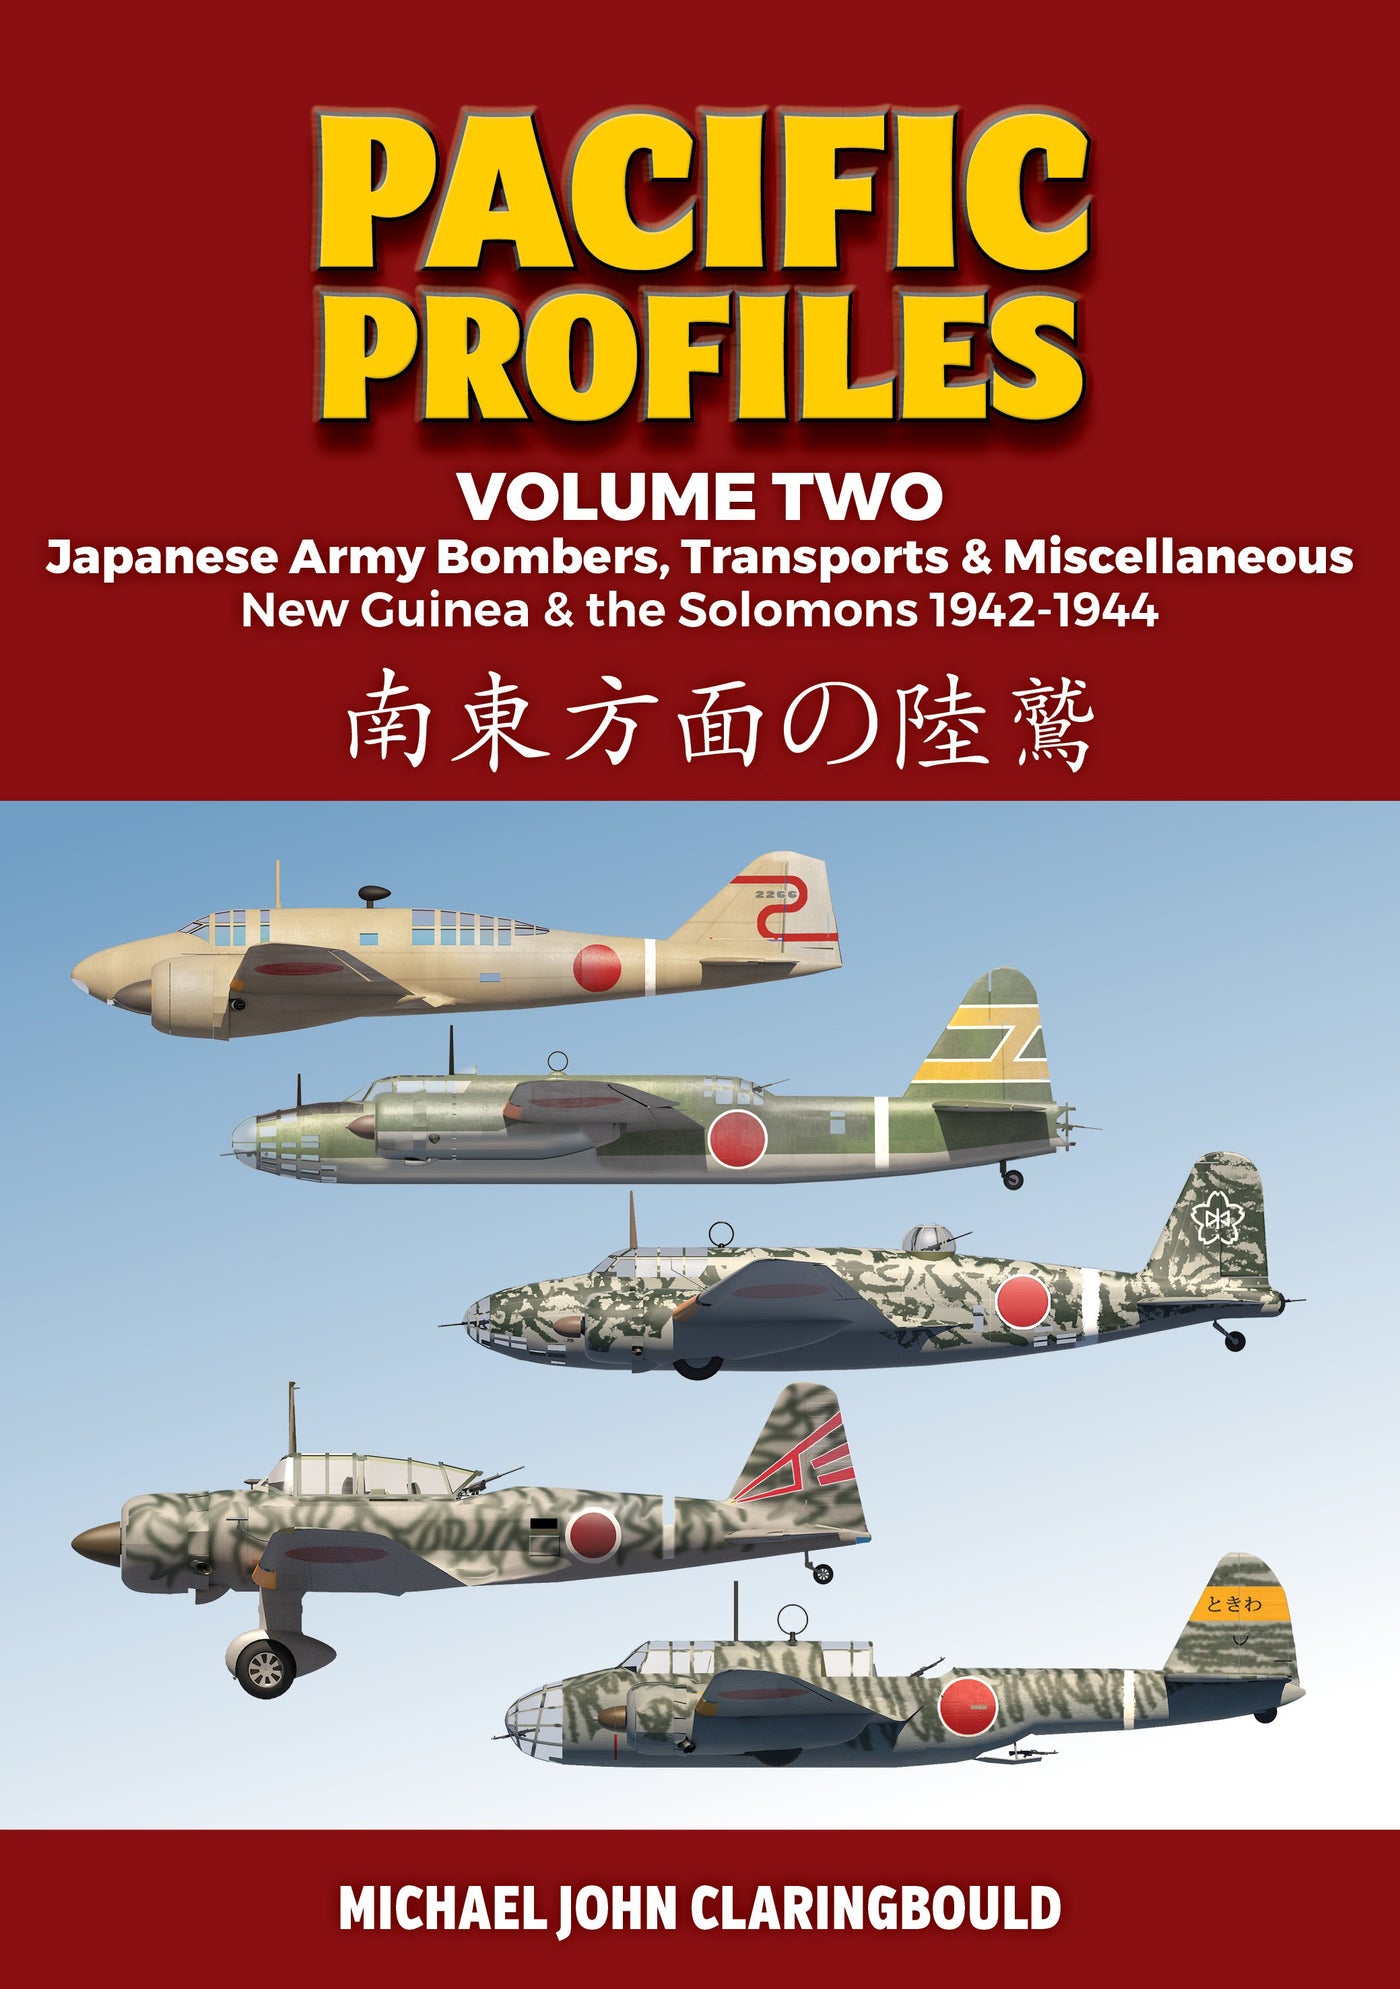 Pacific Profiles Volume Two